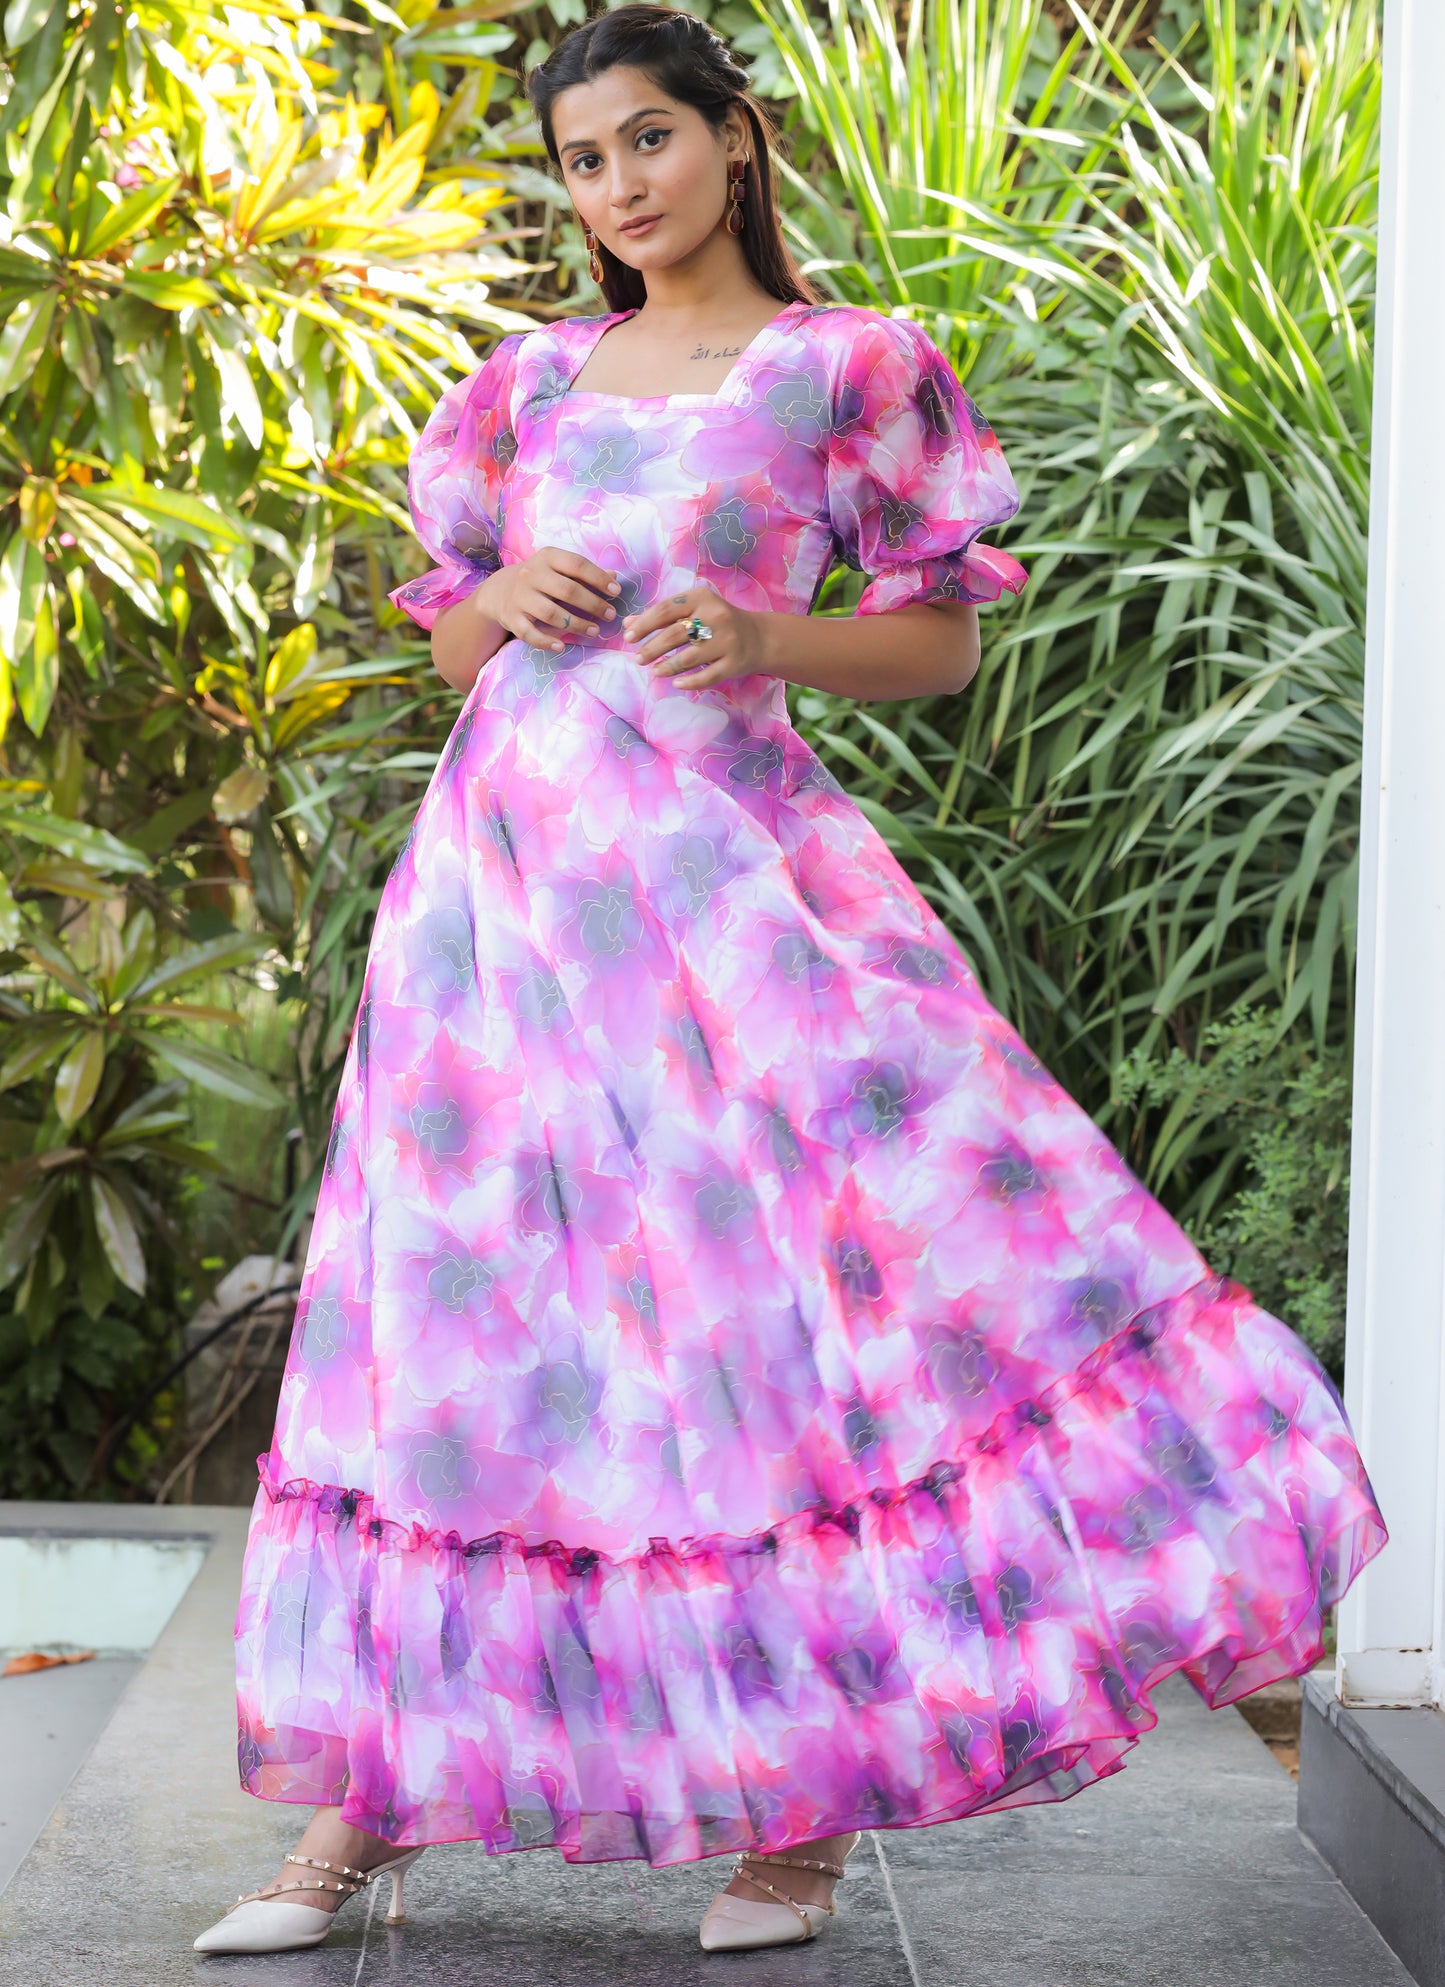 Organza Pink Long Maxi Dress